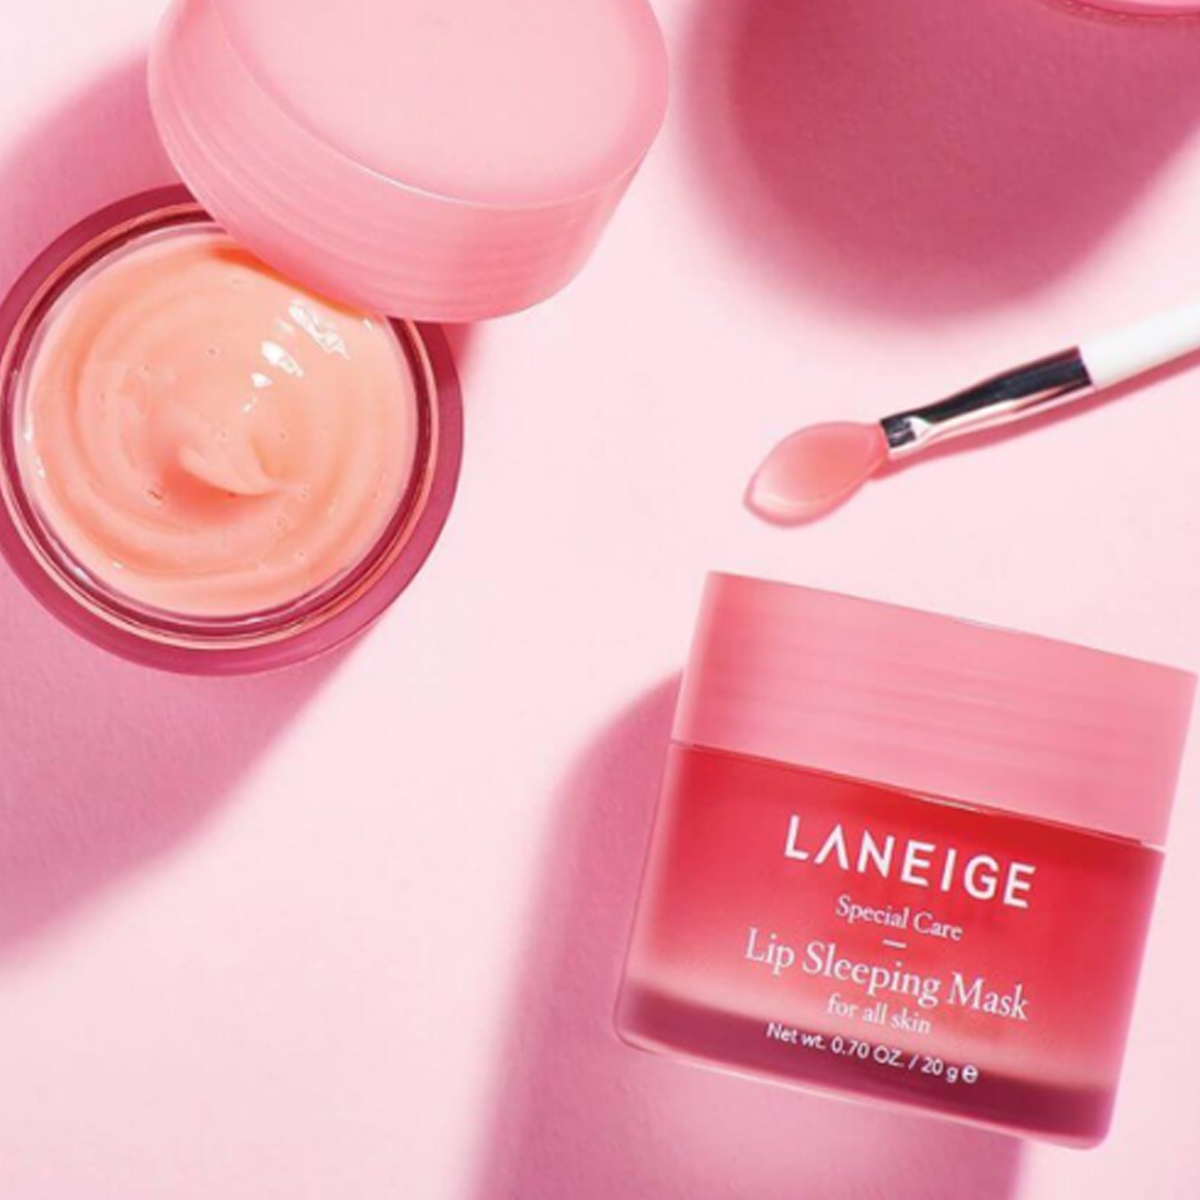 LANEIGE - Korean Cosmetics Skincare -  Hydrating Lip Mask - Lip Sleeping Mask EX Berry [20g] -  Moisture Lip care products - Smooth Lipcare - Hydrate Moisturizing lips - Cosmetic Gift